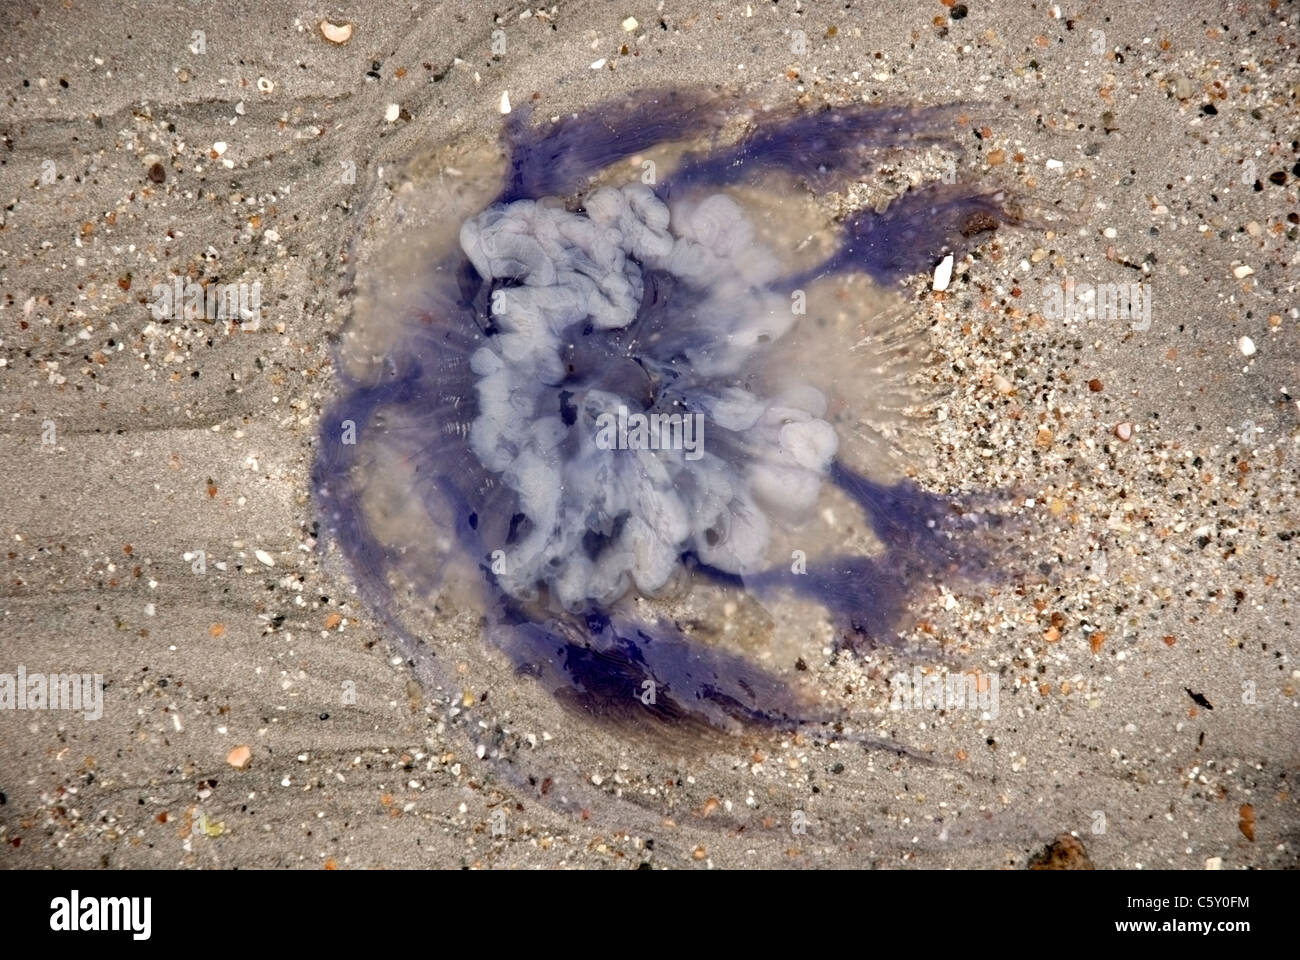 Stranded Jellyfish,Cyanea lamarcki,on a beach on the isle of Tiree, Scotland Stock Photo